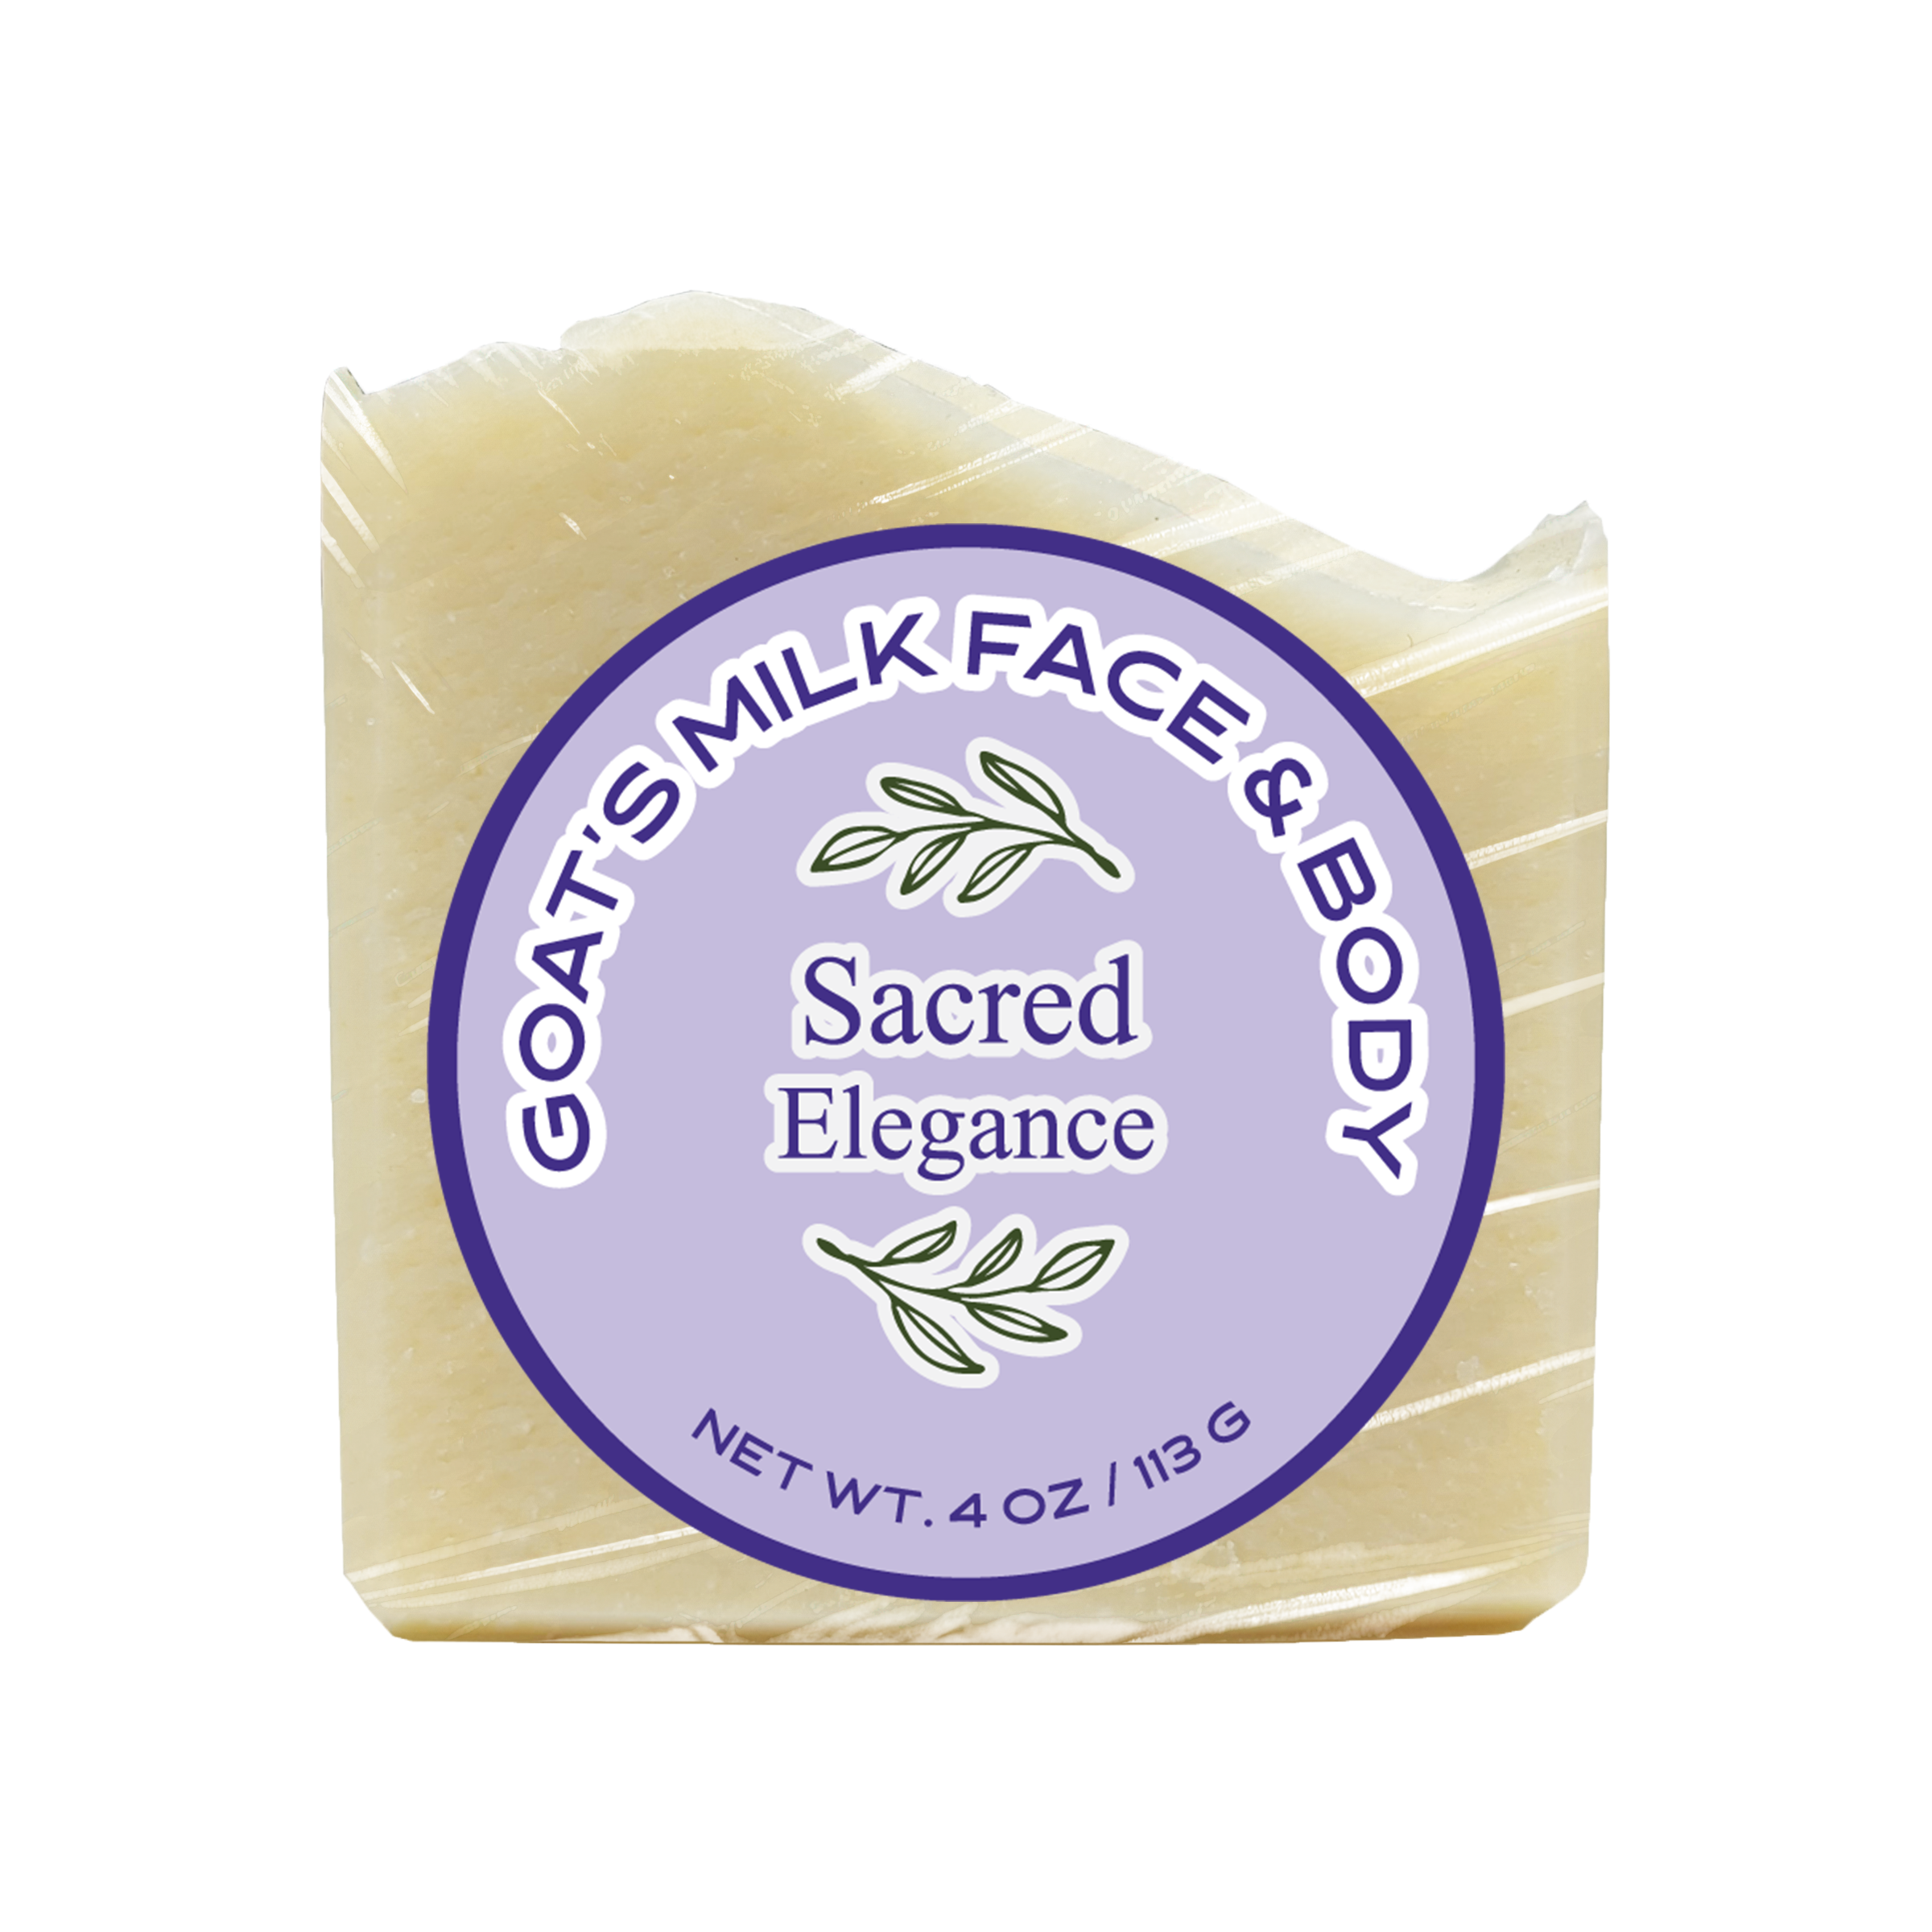 Silky Smooth Face & Body Soap